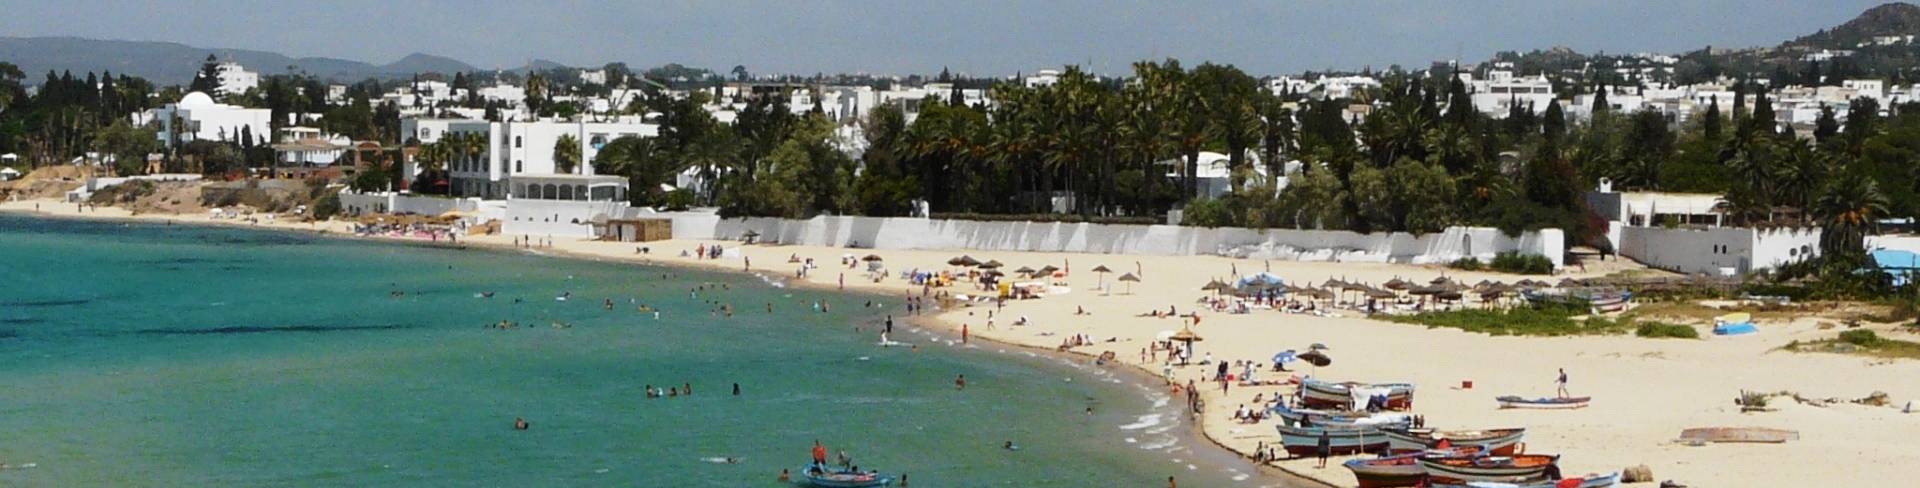 Хаммамет - пляжный курорт в Тунисе